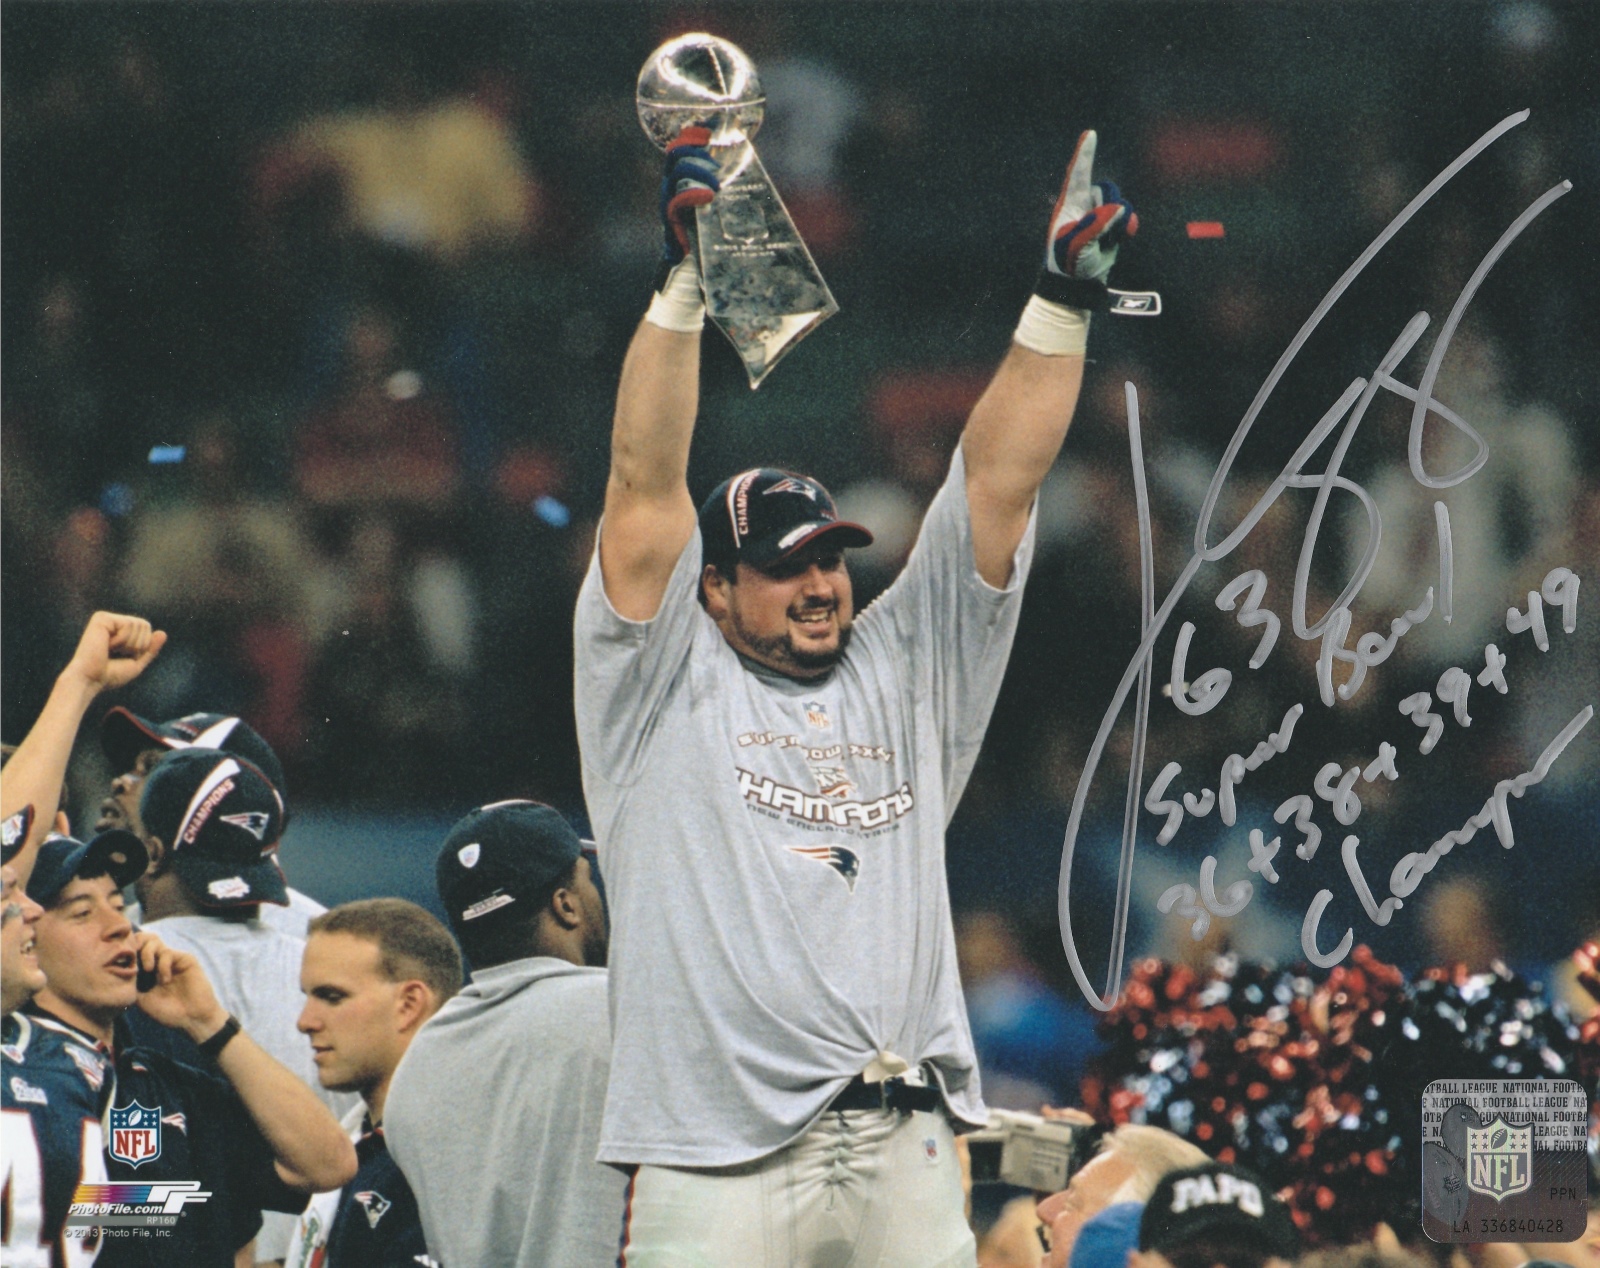 Joe Andruzzi Autograph 8x10 Color photo New England Patriots